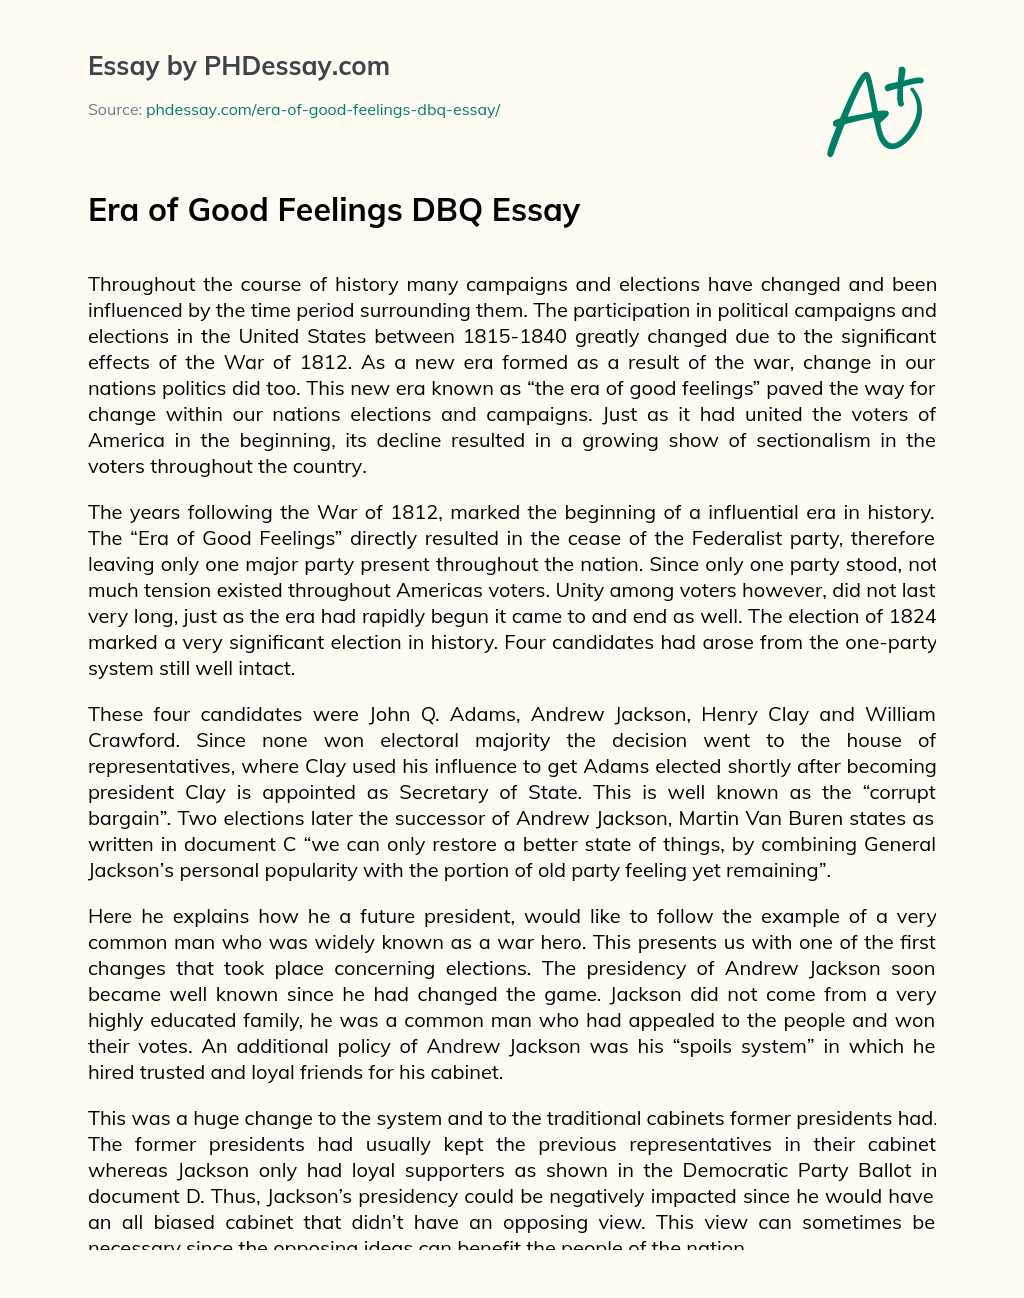 Era of Good Feelings DBQ Essay essay